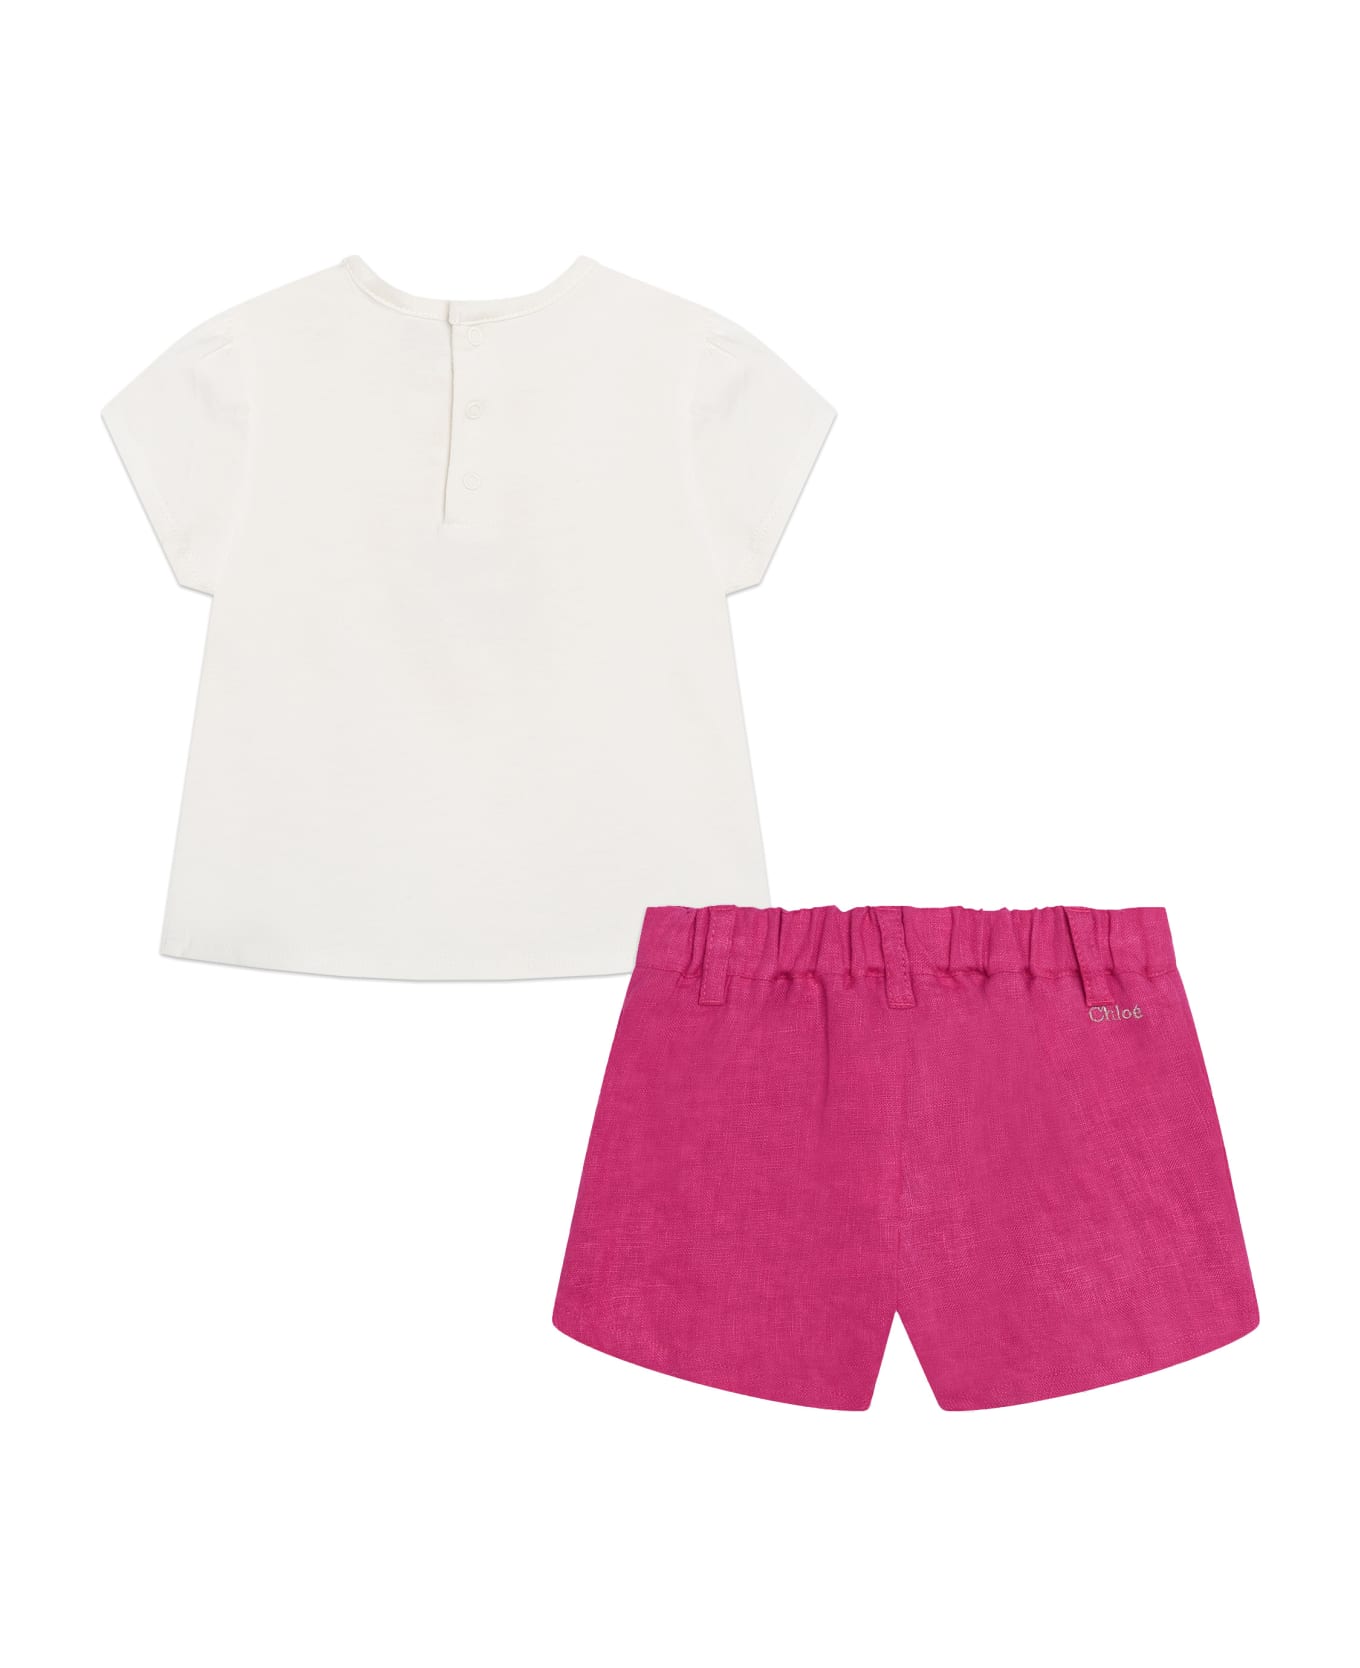 Chloé Shorts Set With Print - White